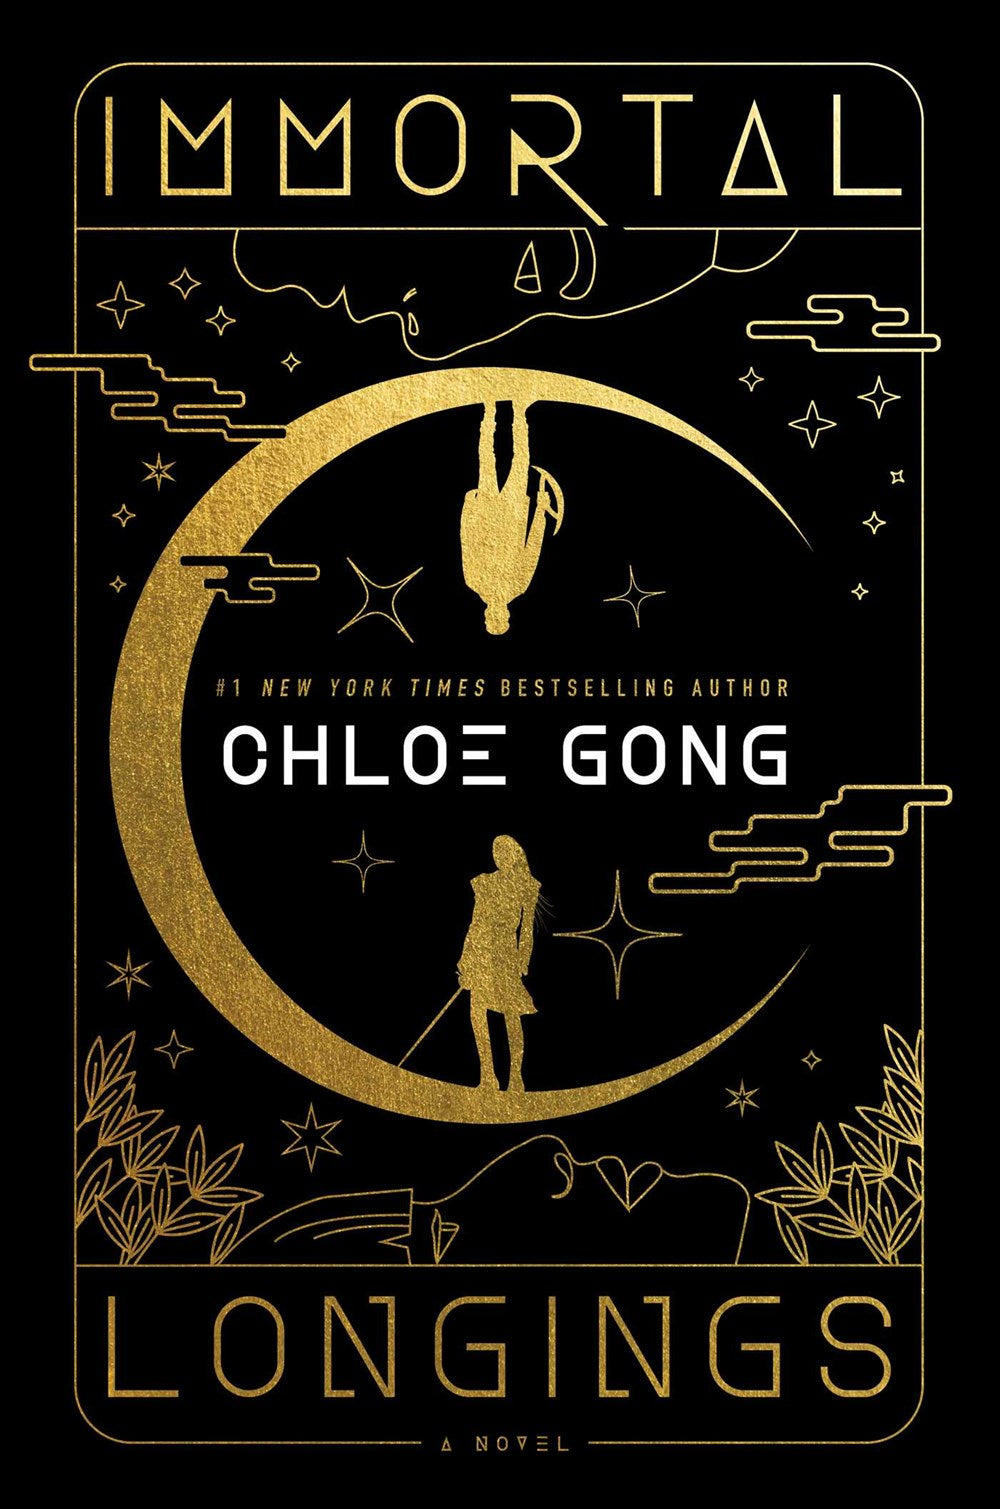 Immortal Longings - Chloe Gong